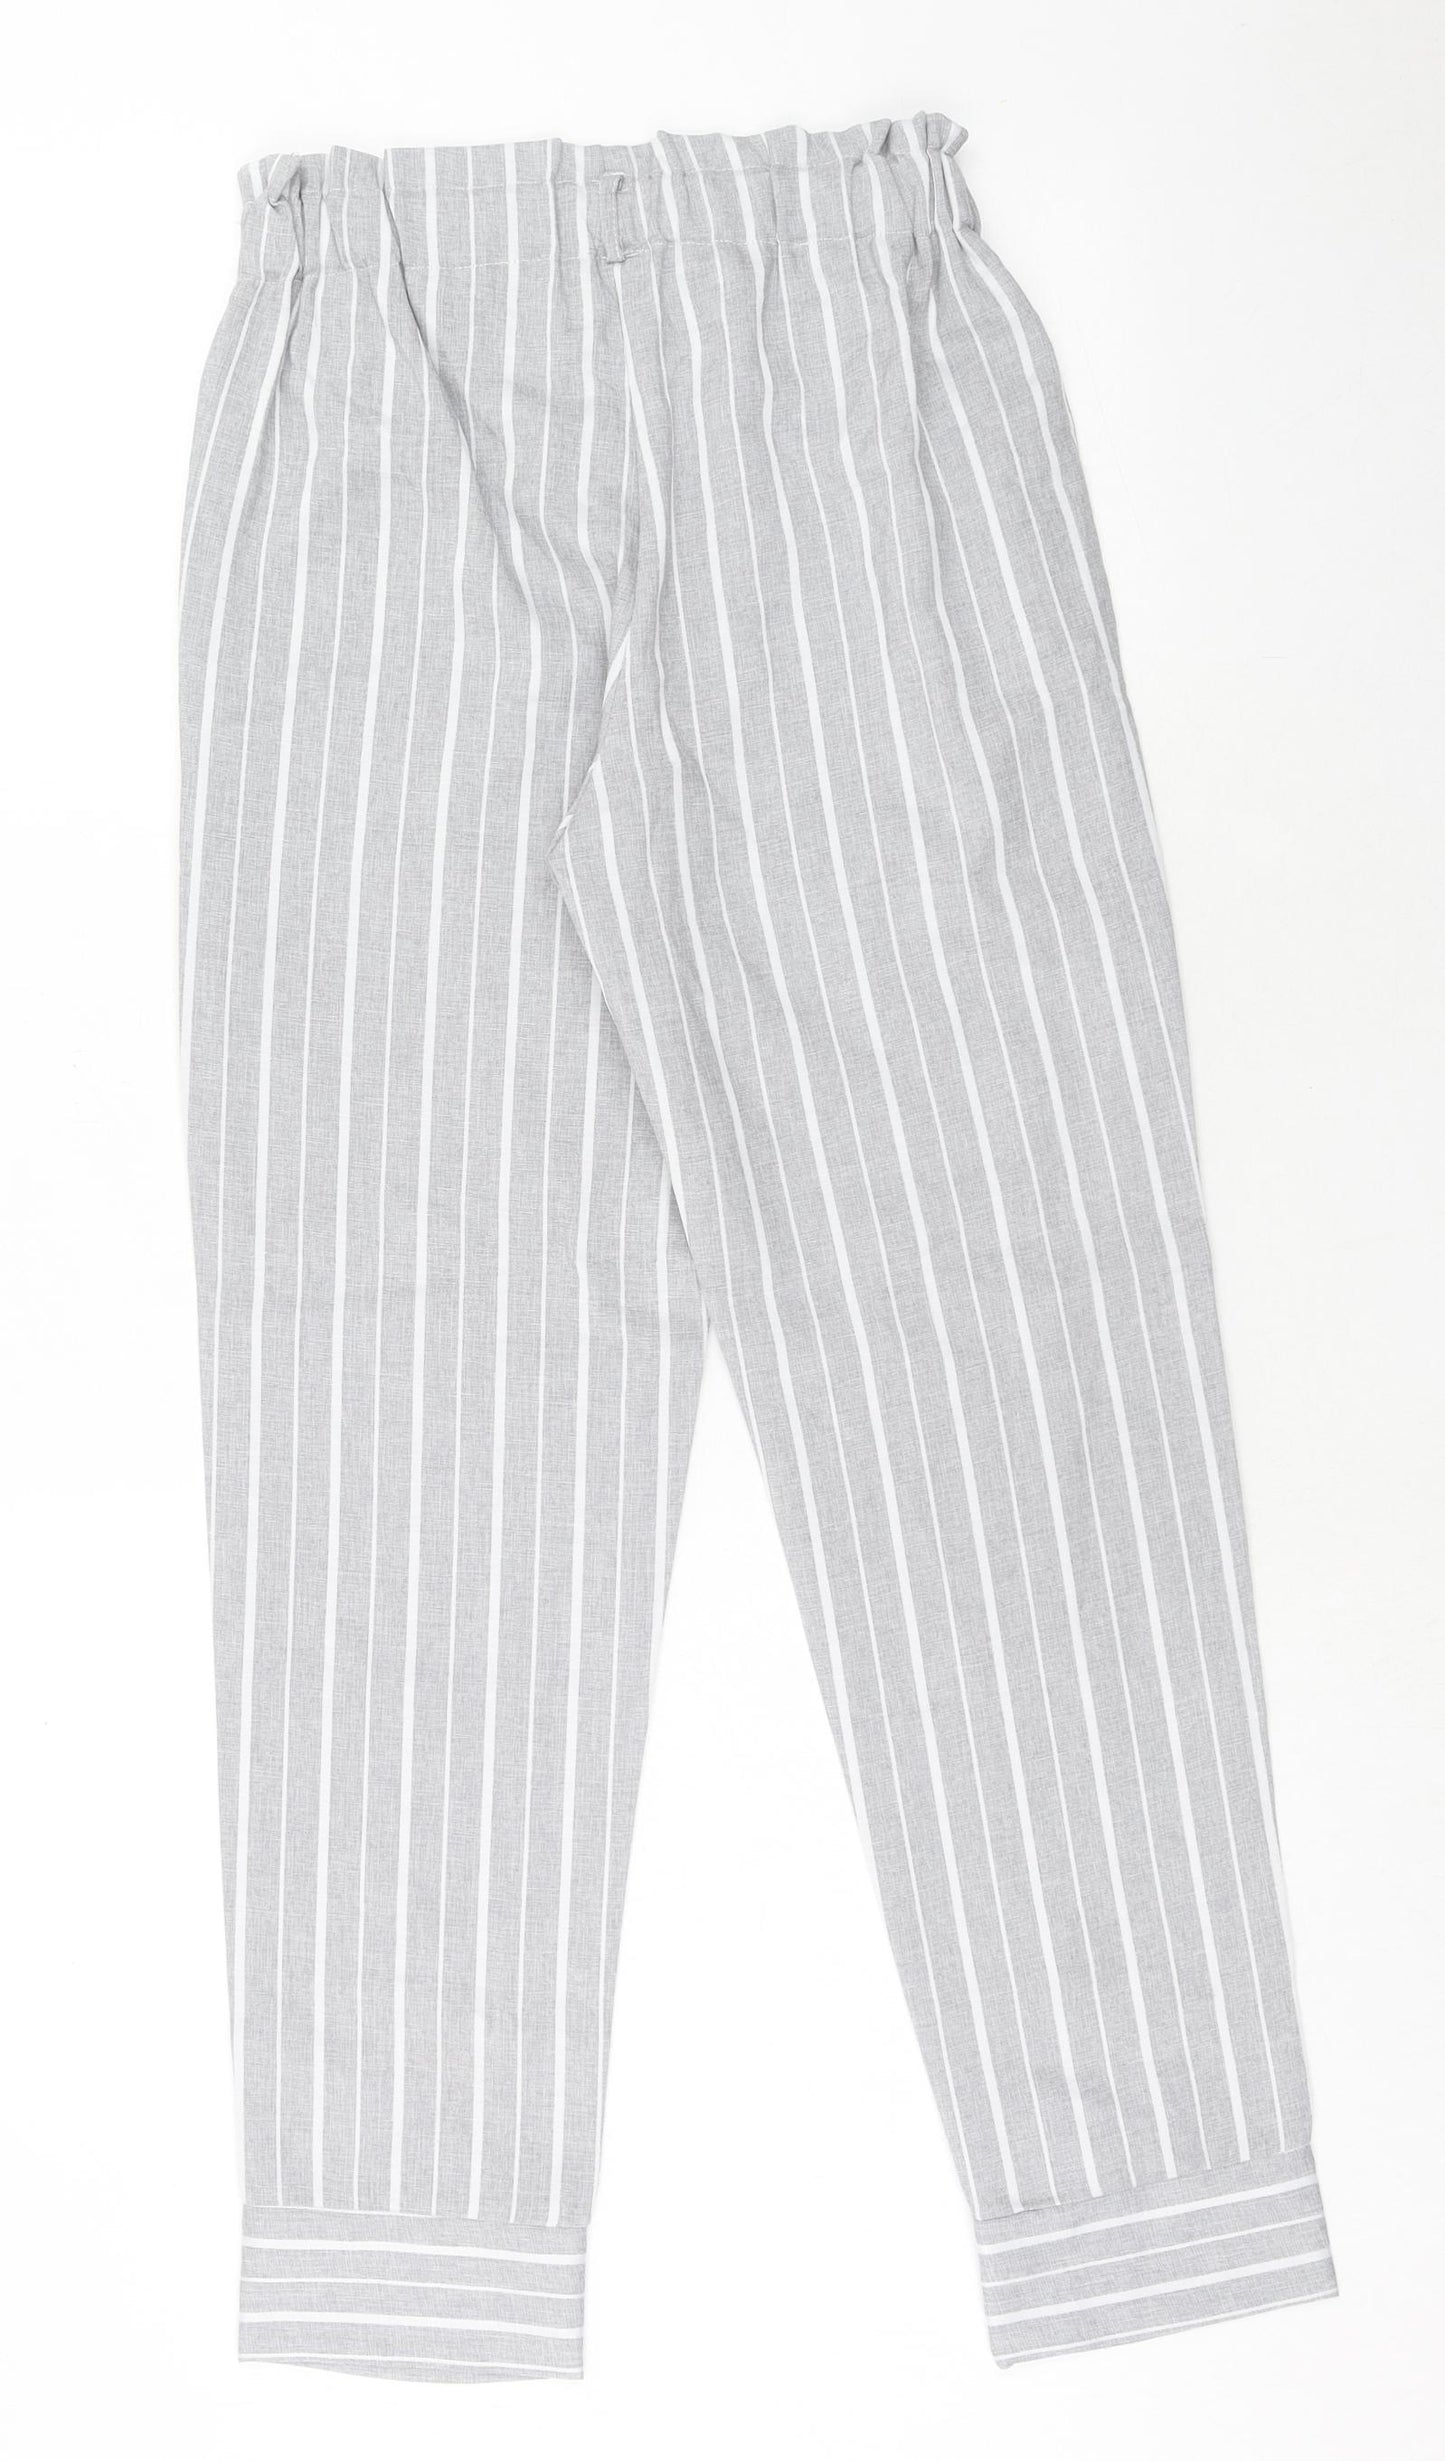 Zaful Womens Grey Striped Polyester Trousers Size 10 Regular